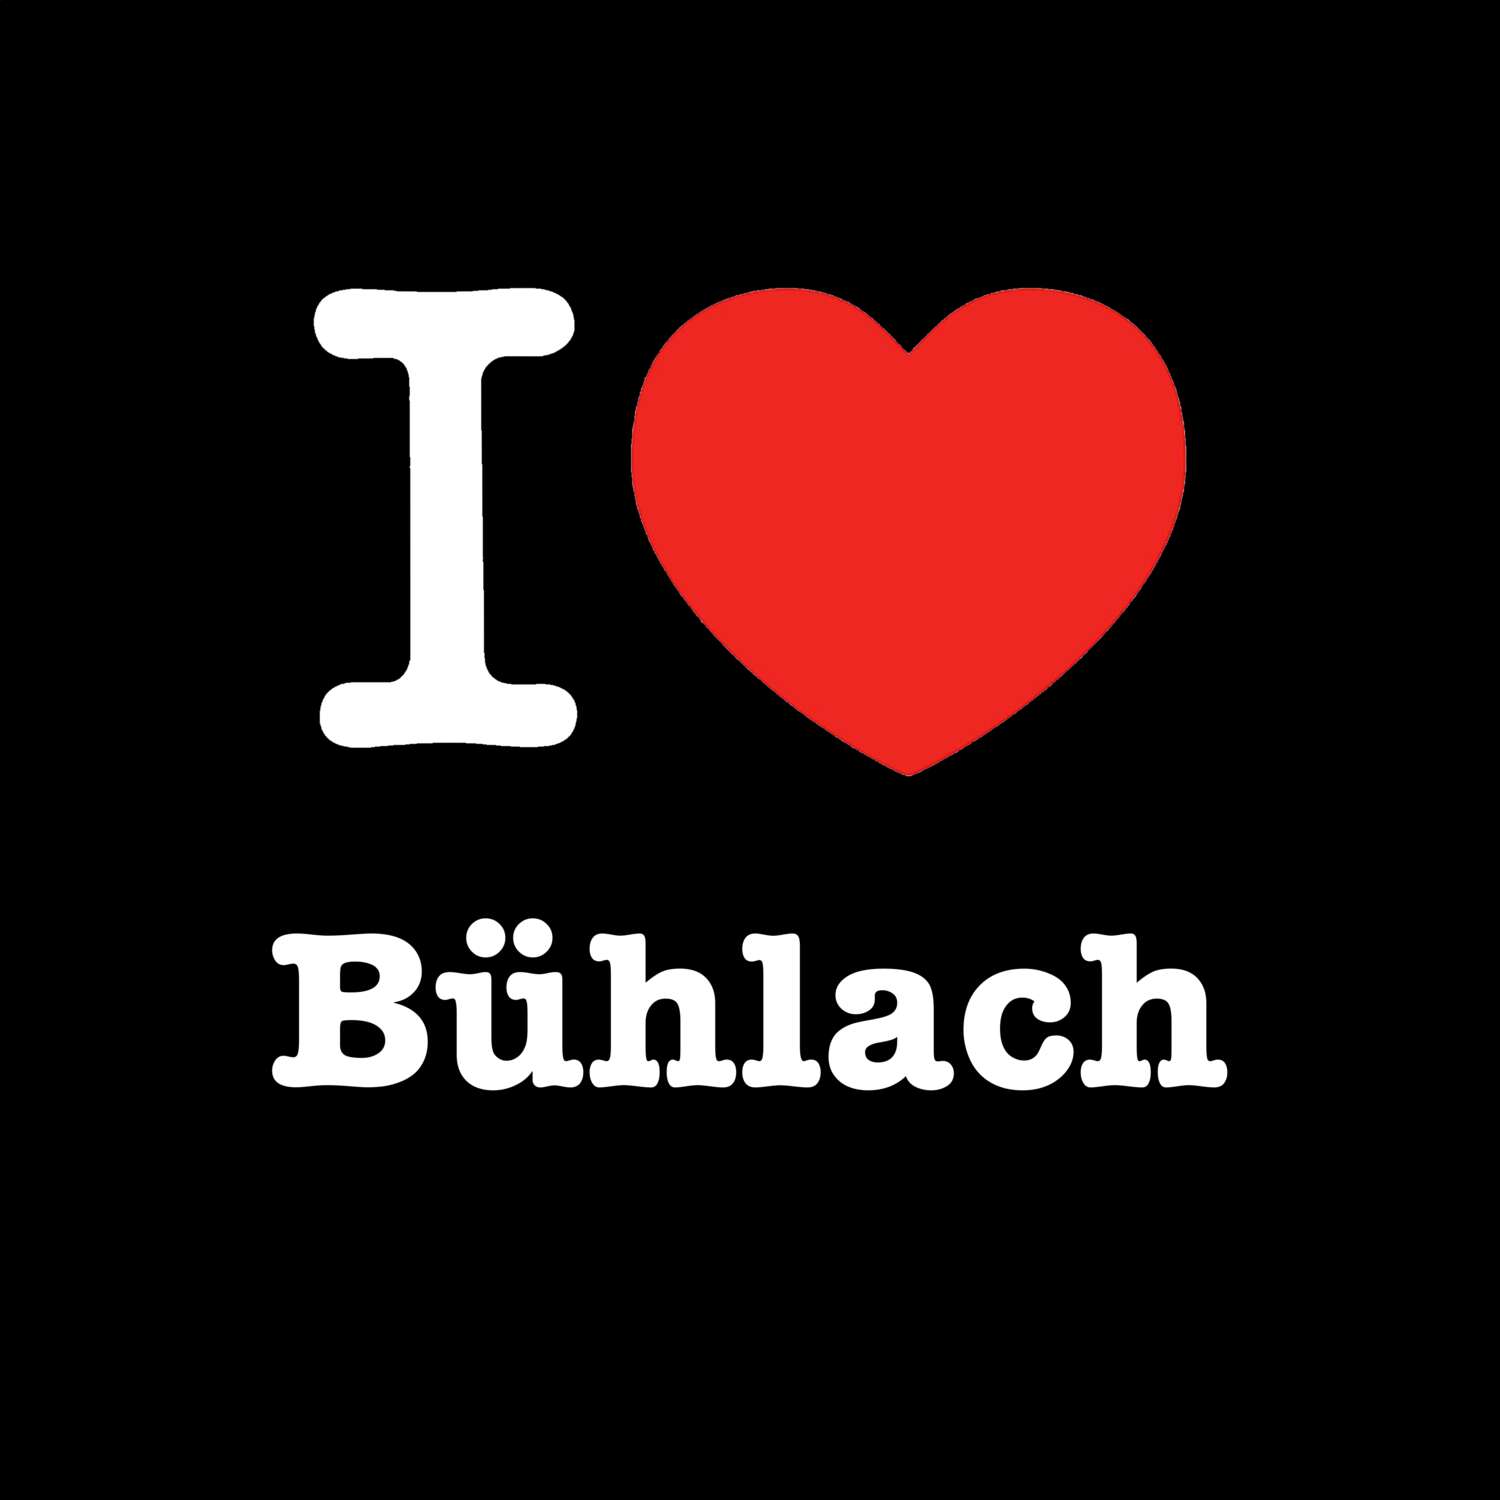 Bühlach T-Shirt »I love«